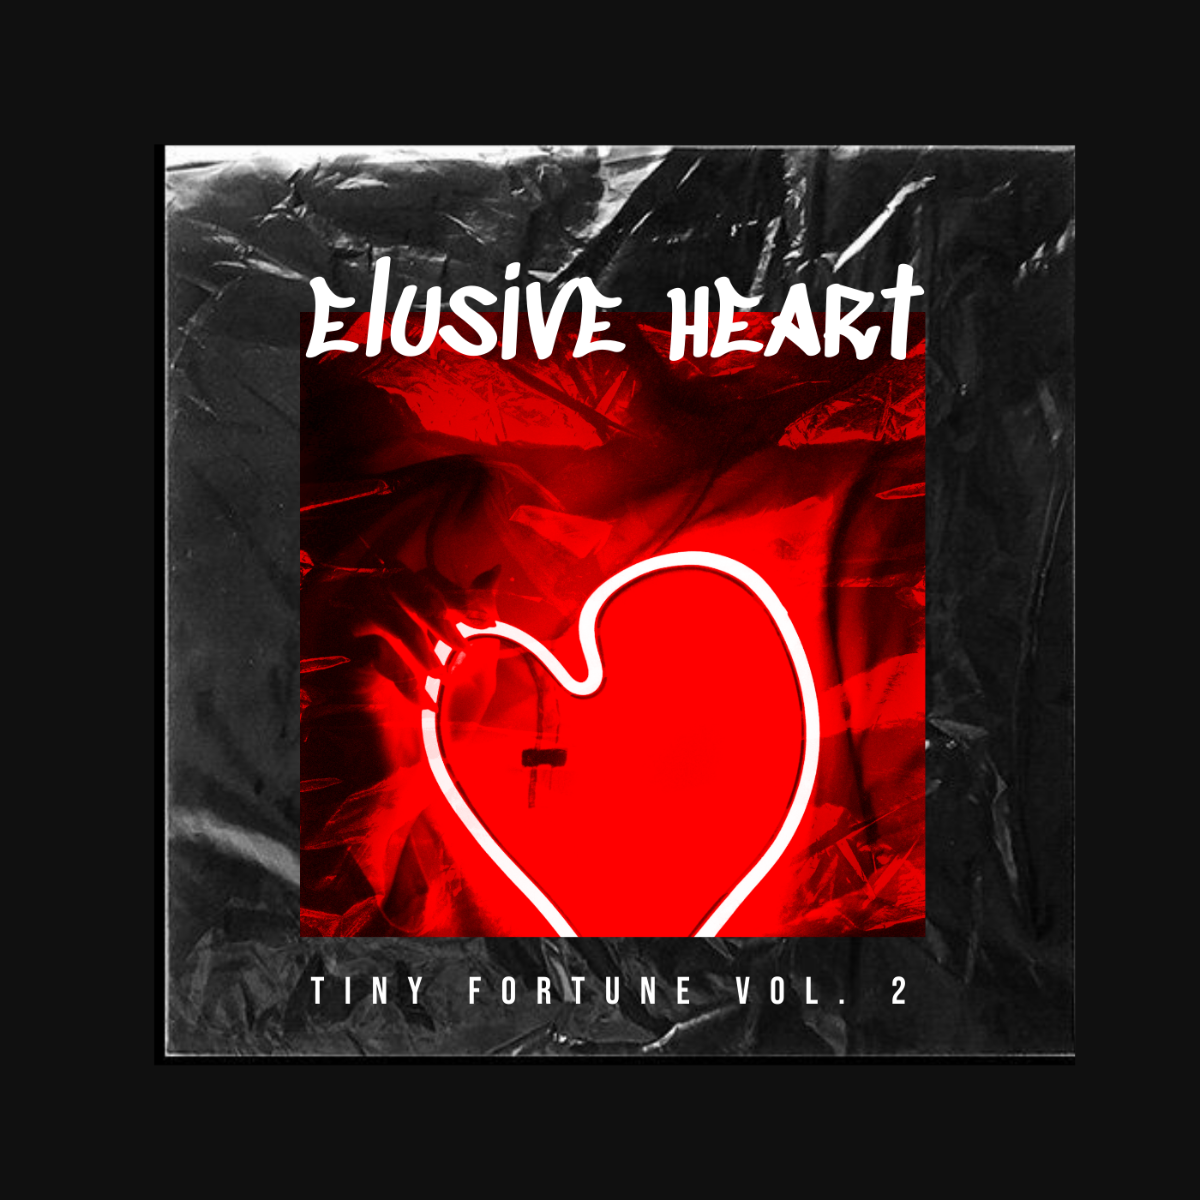 Heart Album Cover Template